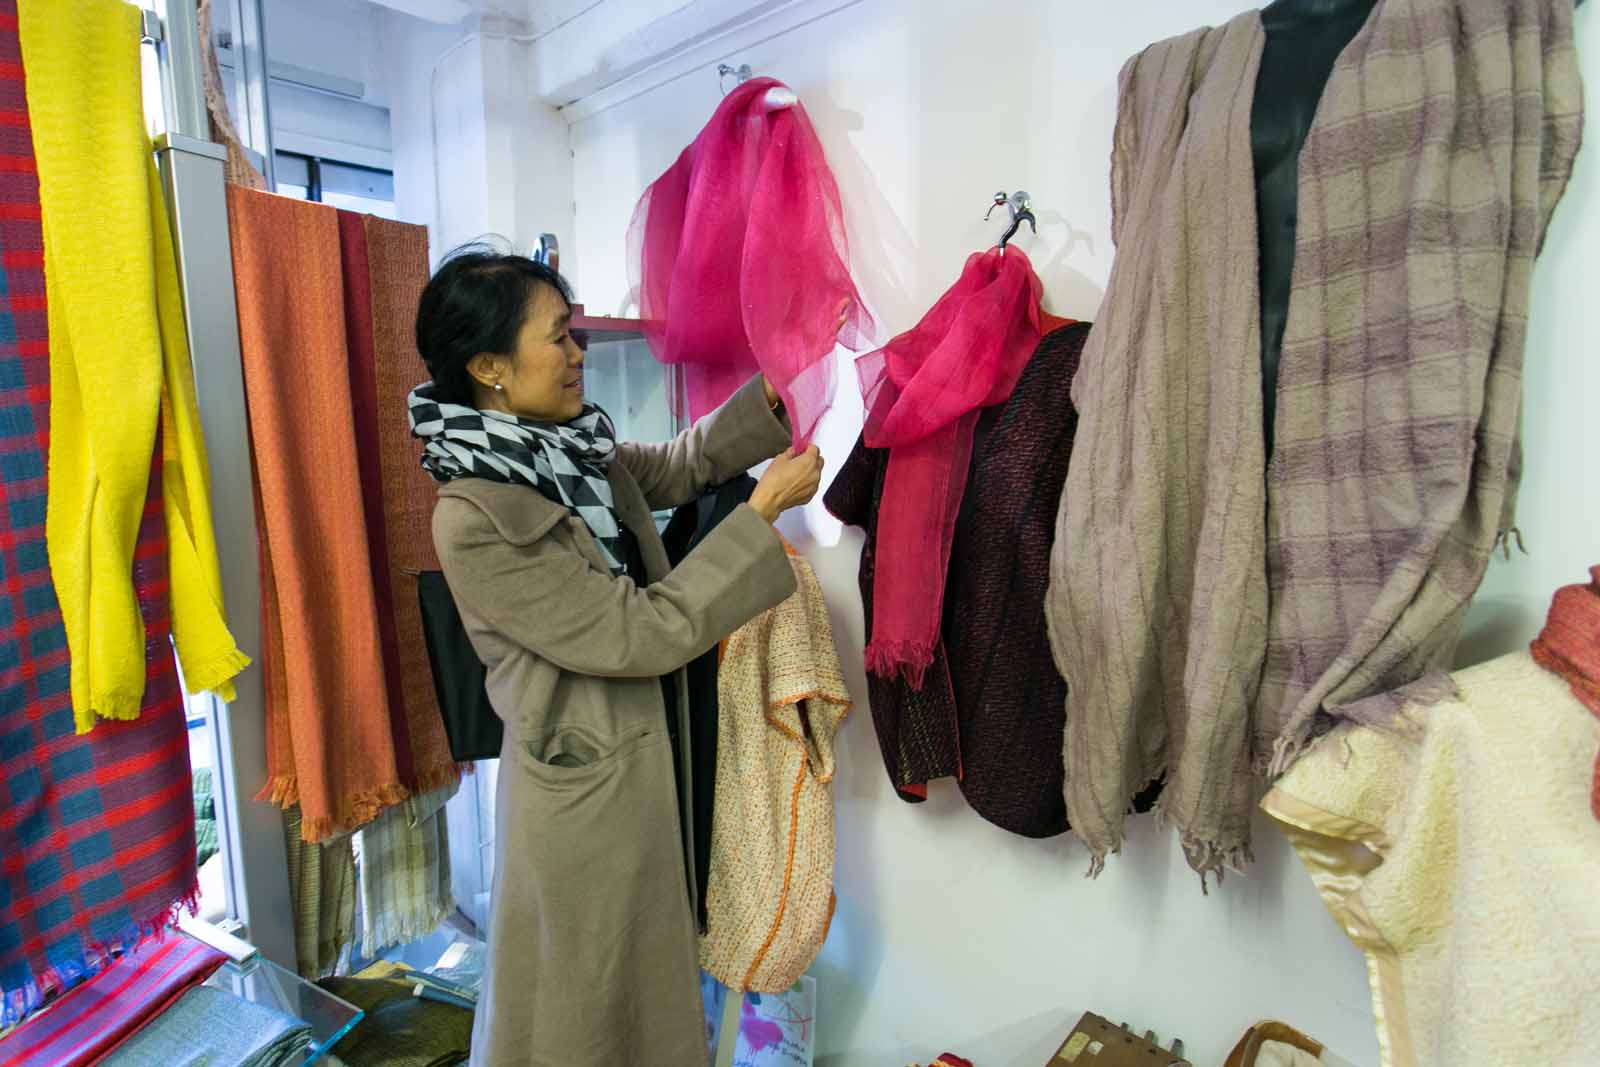 Daw Khine inspects garments in a textiles social enterprise